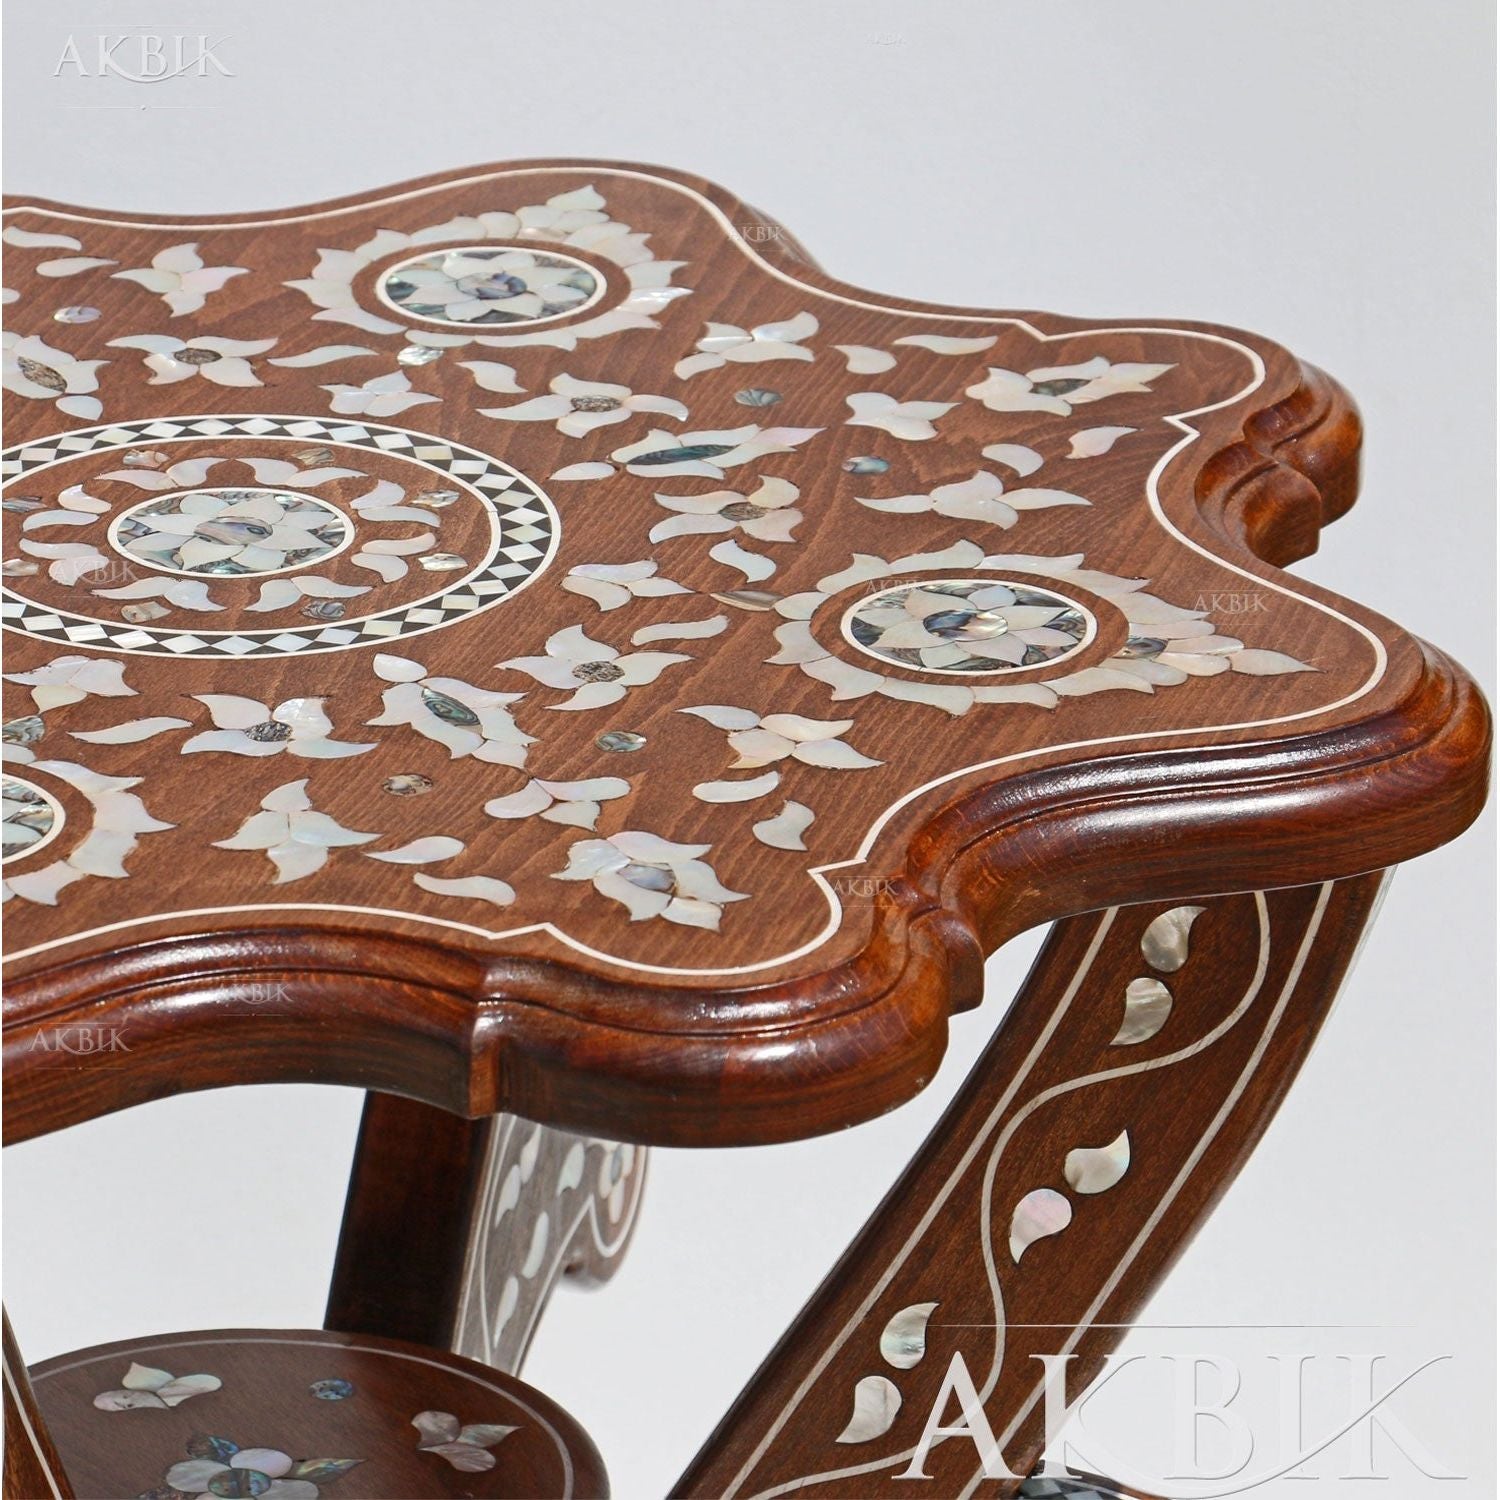 SIDE TABLE - NIGHTSTAND ALTERNATIVE - AKBIK Furniture & Design